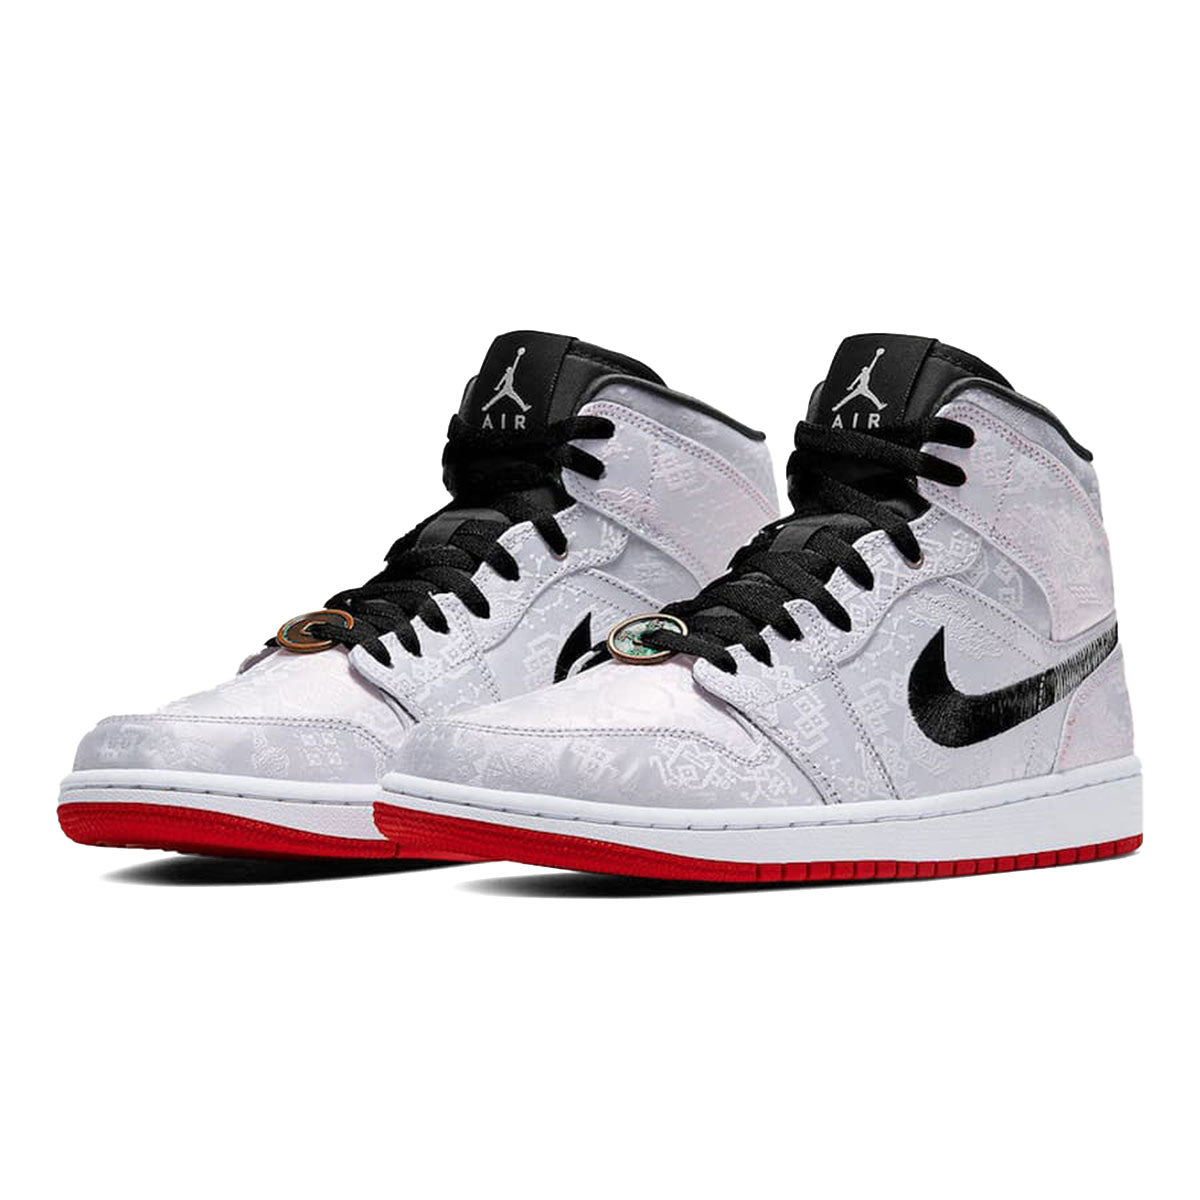 NIKE AIR JORDAN 1 MID SE FRLS GC (白色/黑色 - 白色) Nike Air Jordan 1 Mid SE FRLS GC 白色/黑色 - 白色 [CU2804-100]